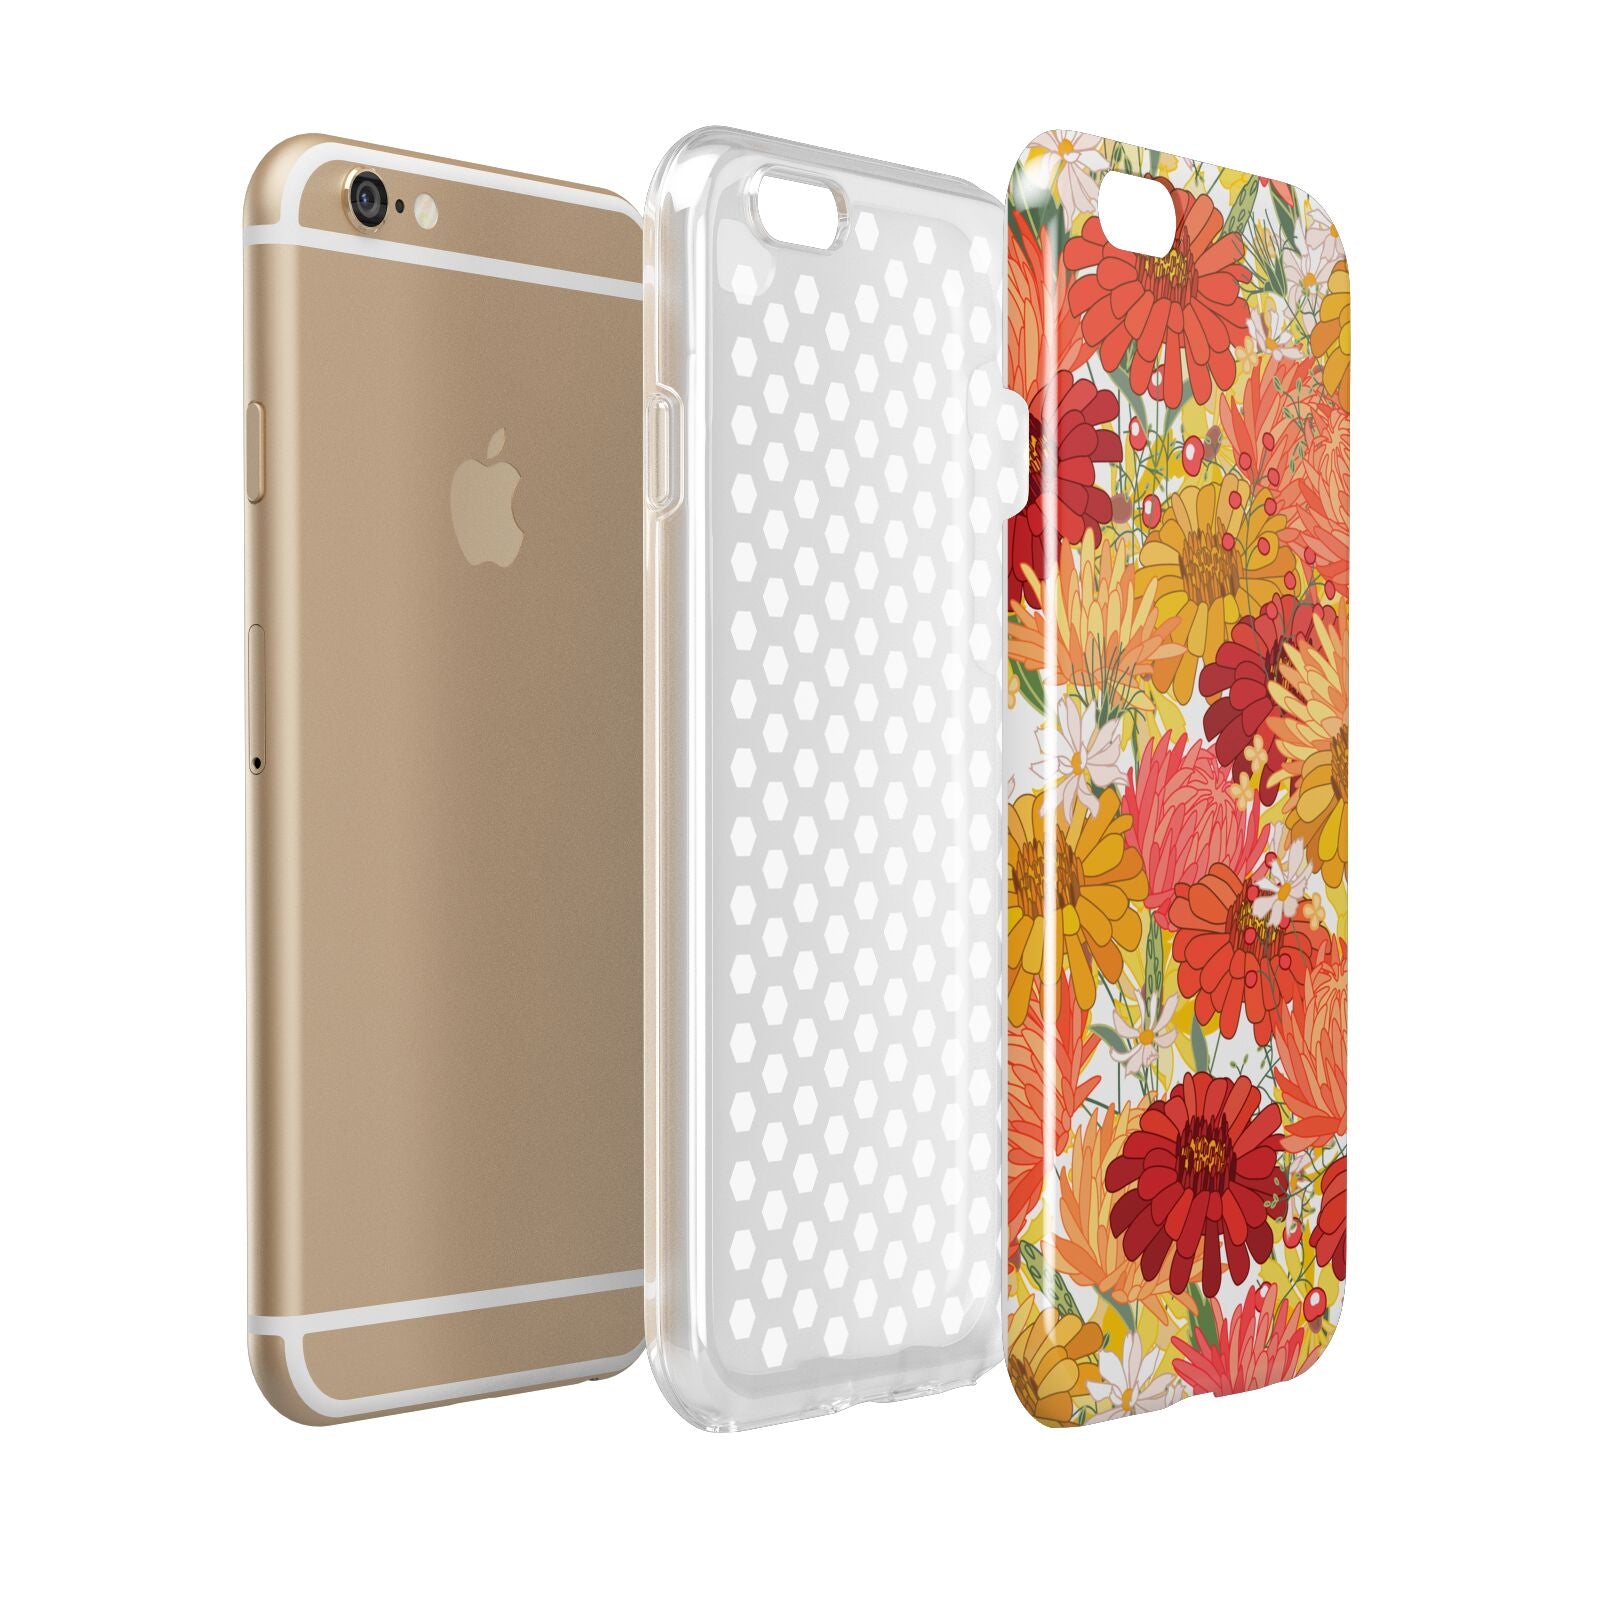 Floral Gerbera Apple iPhone 6 3D Tough Case Expanded view